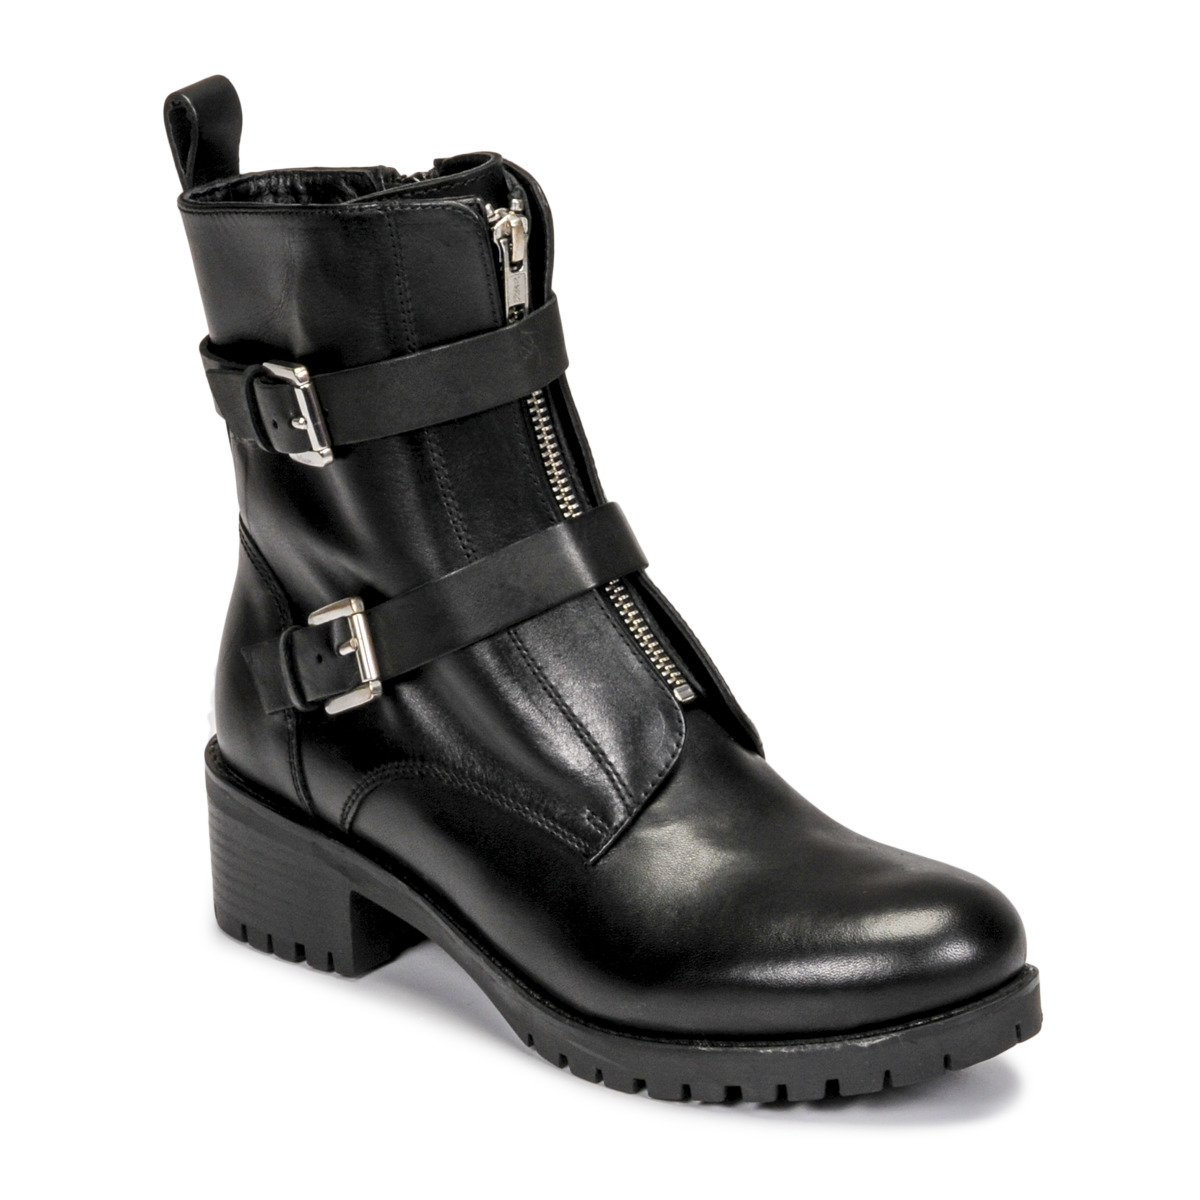 Shoes Women Mid boots Cosmo Paris KARINE Black